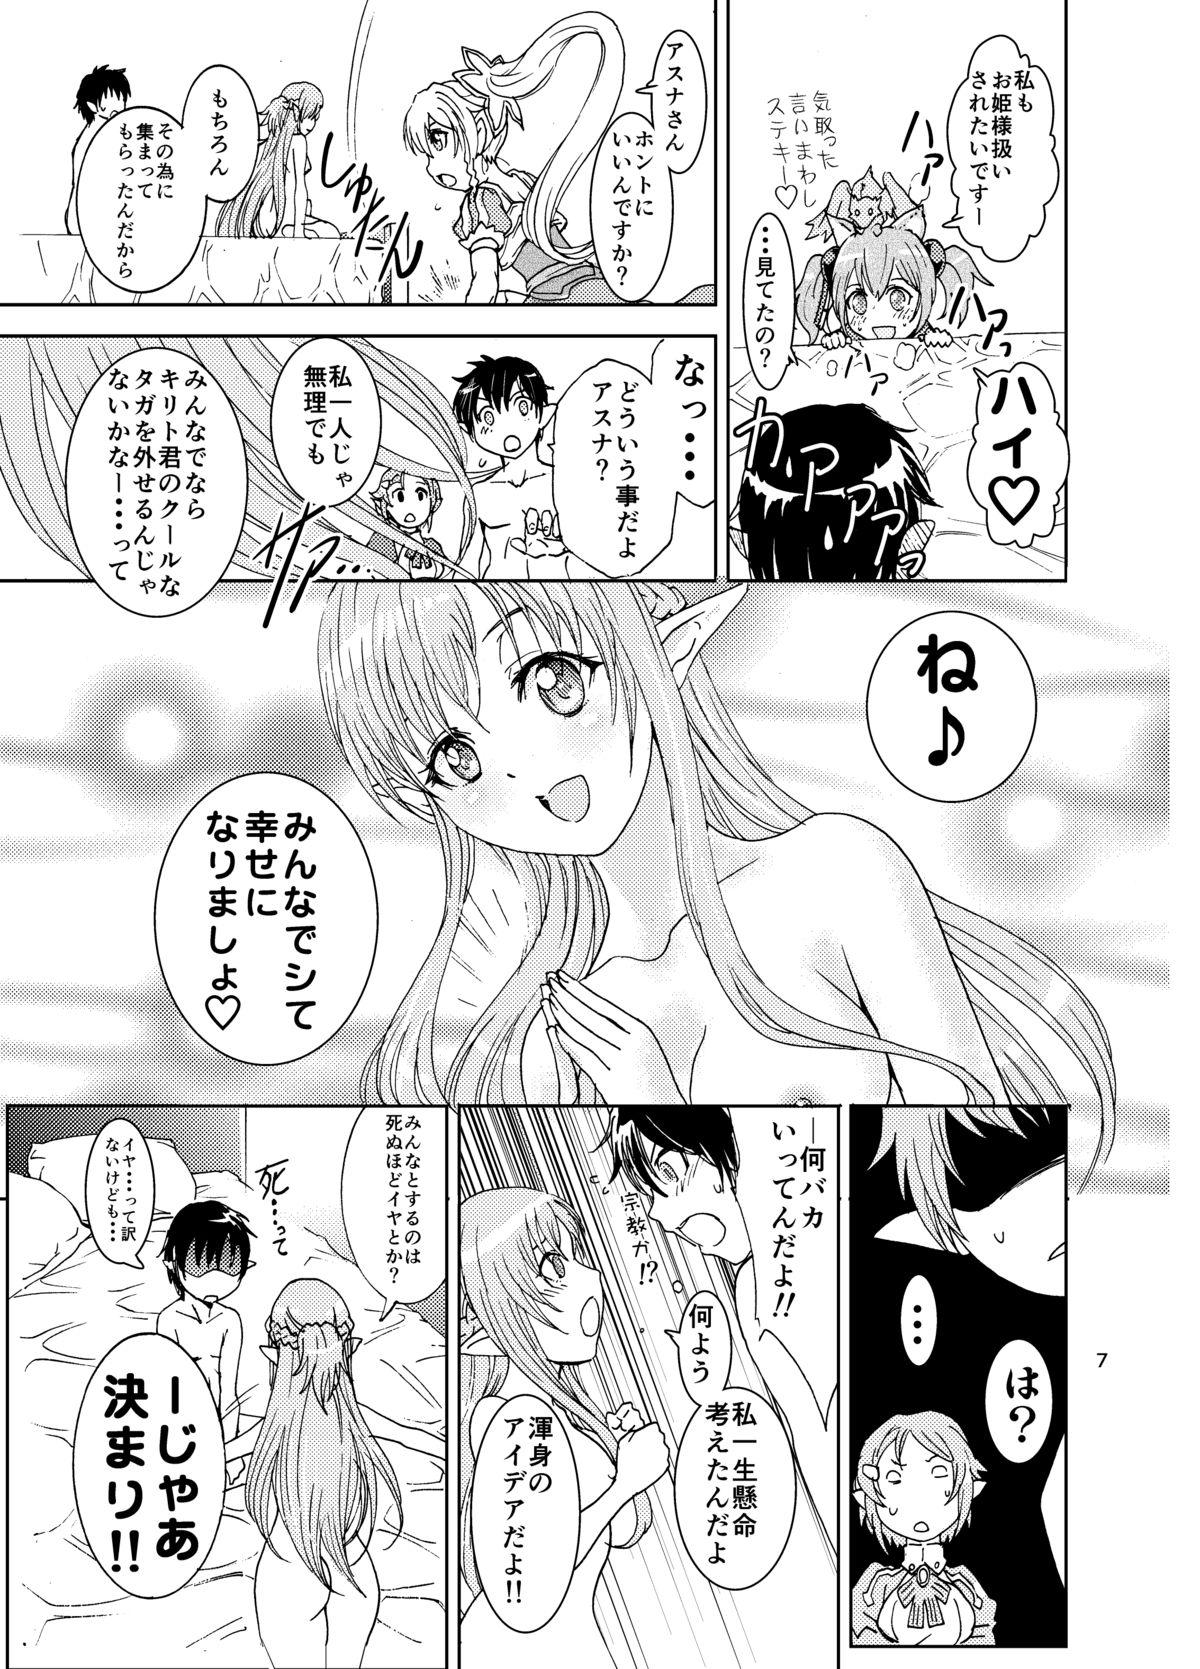 Sharing Etsuraku Cross Heaven - Sword art online Female - Page 7